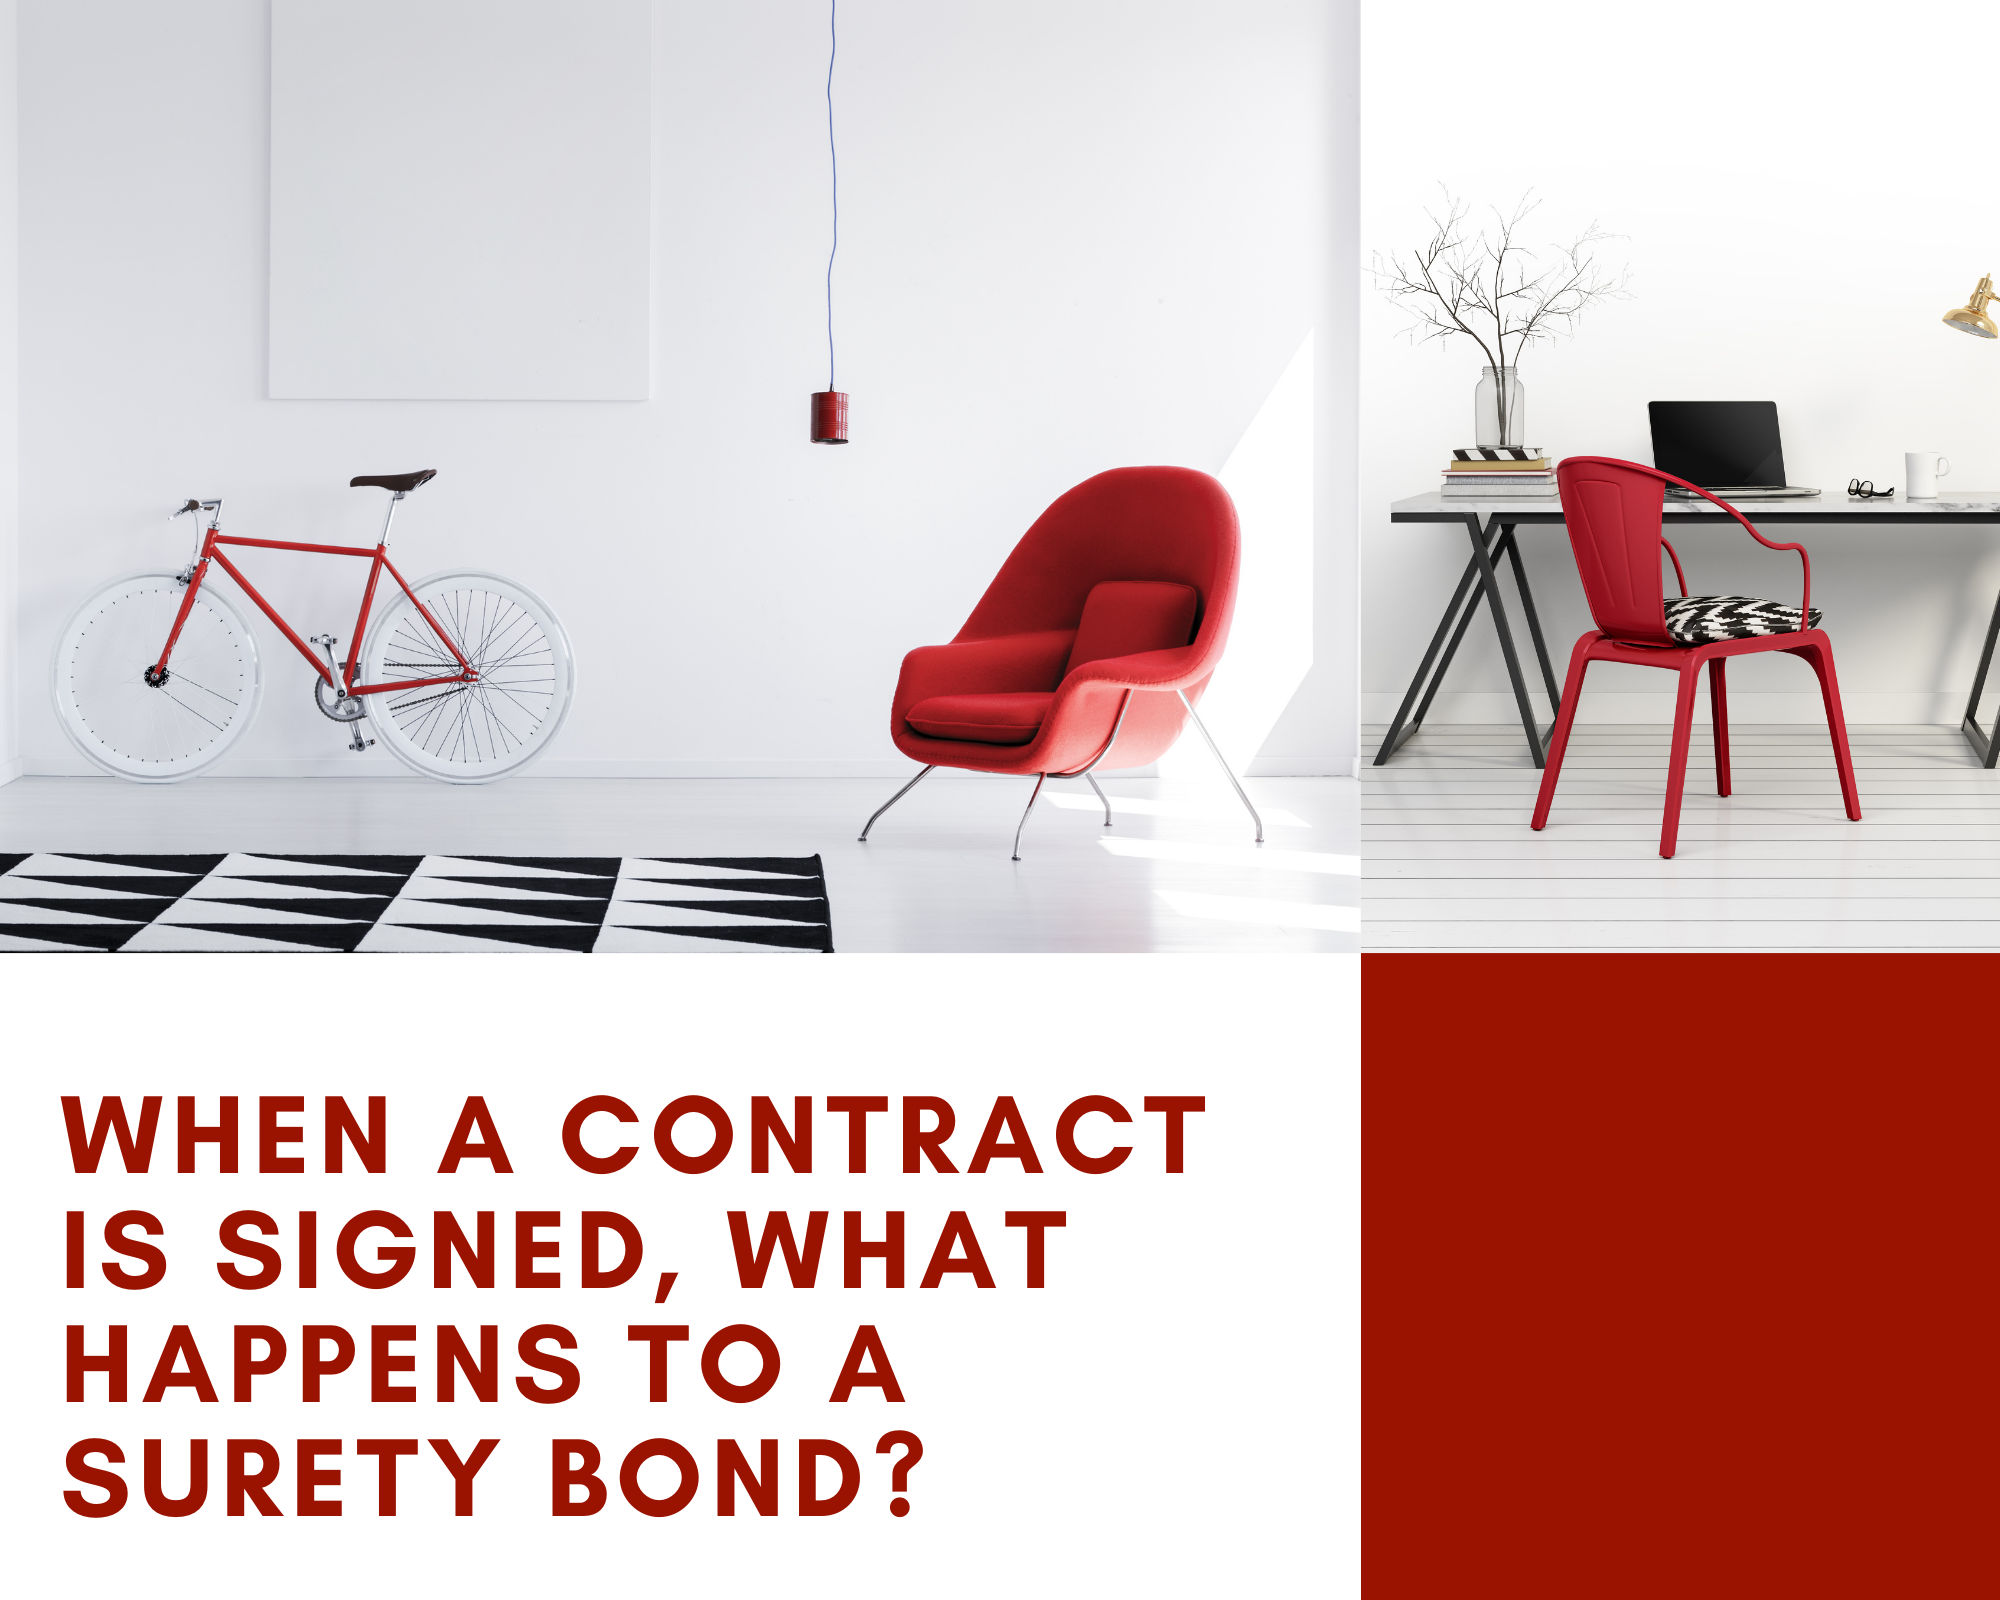 surety bonds - what is a surety bond - interior design of a house in red color scheme